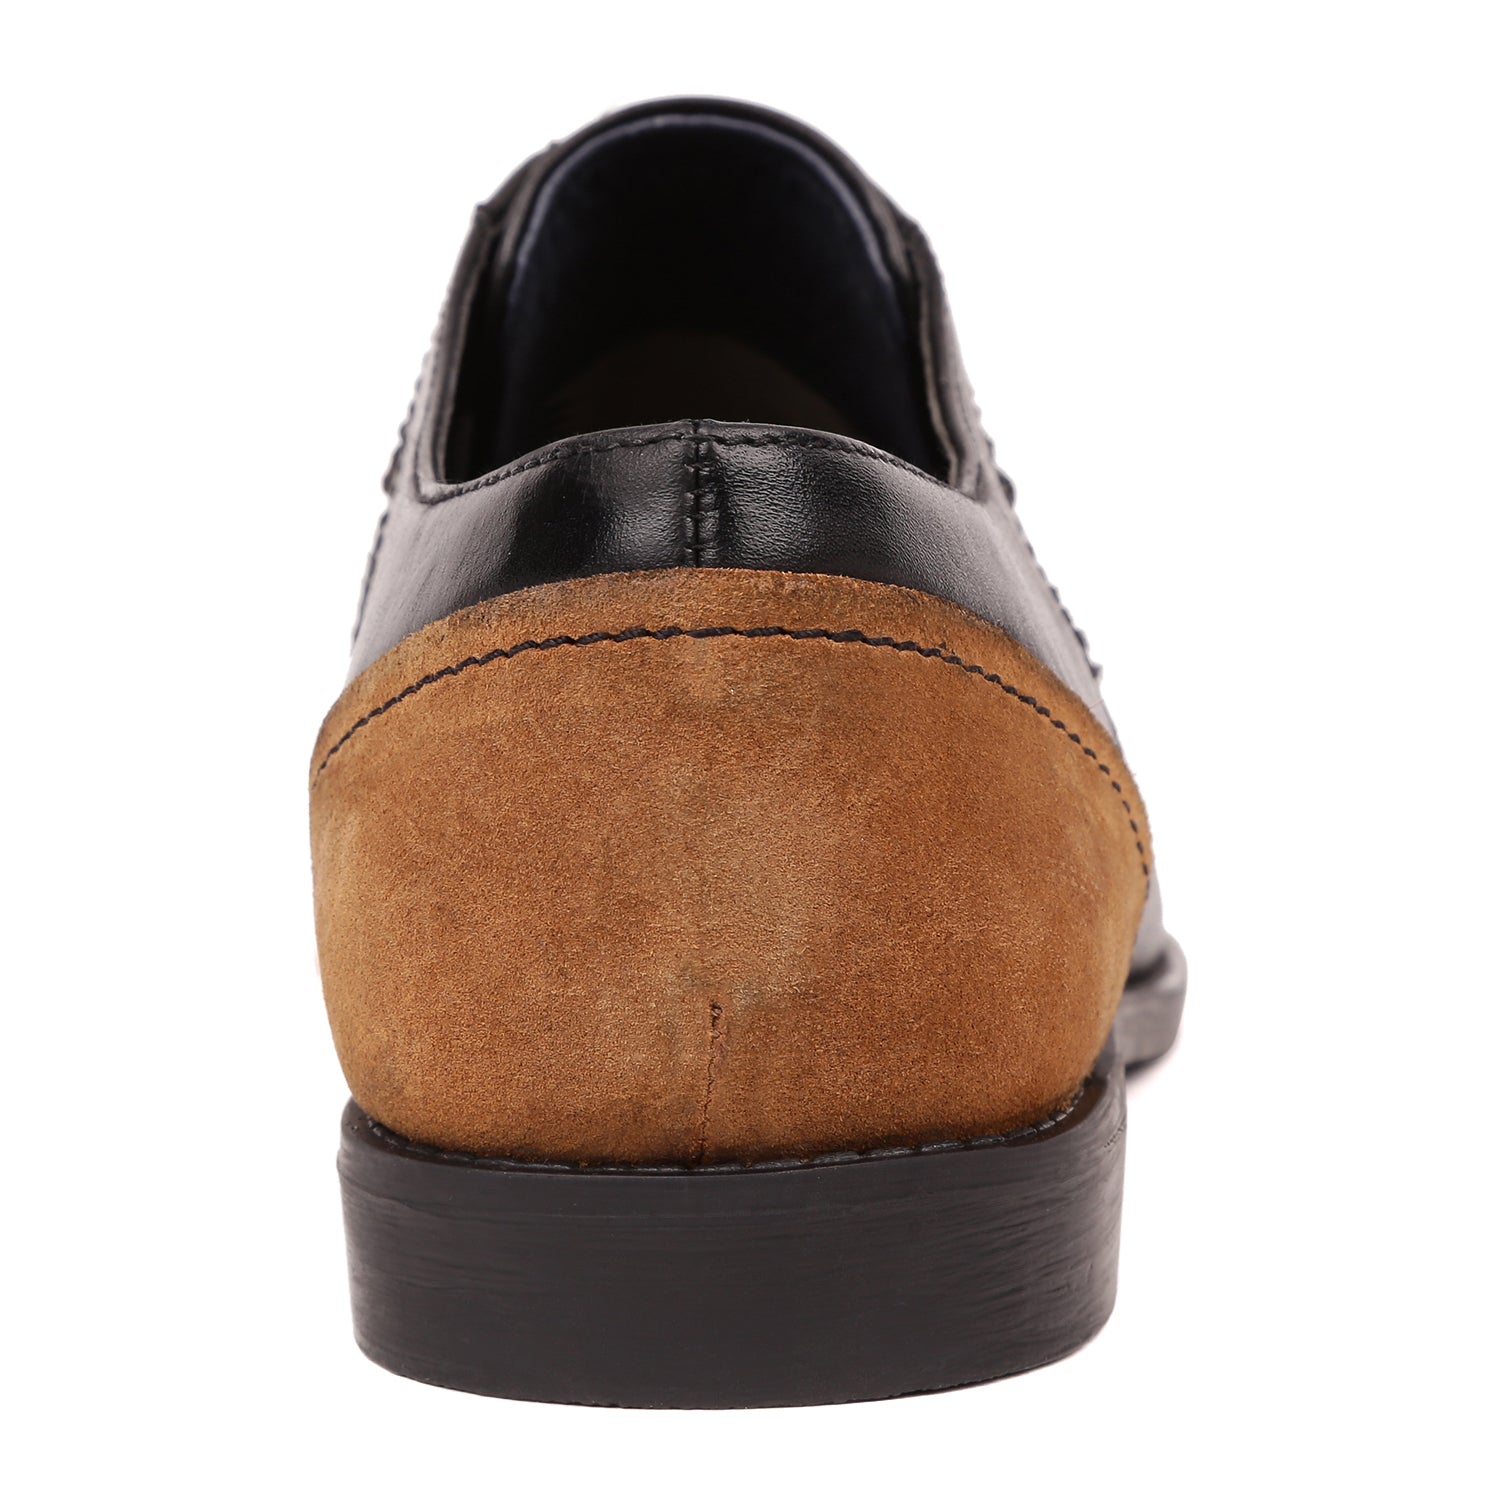 MASABIH European Standard Leather Mens Formals Shoes